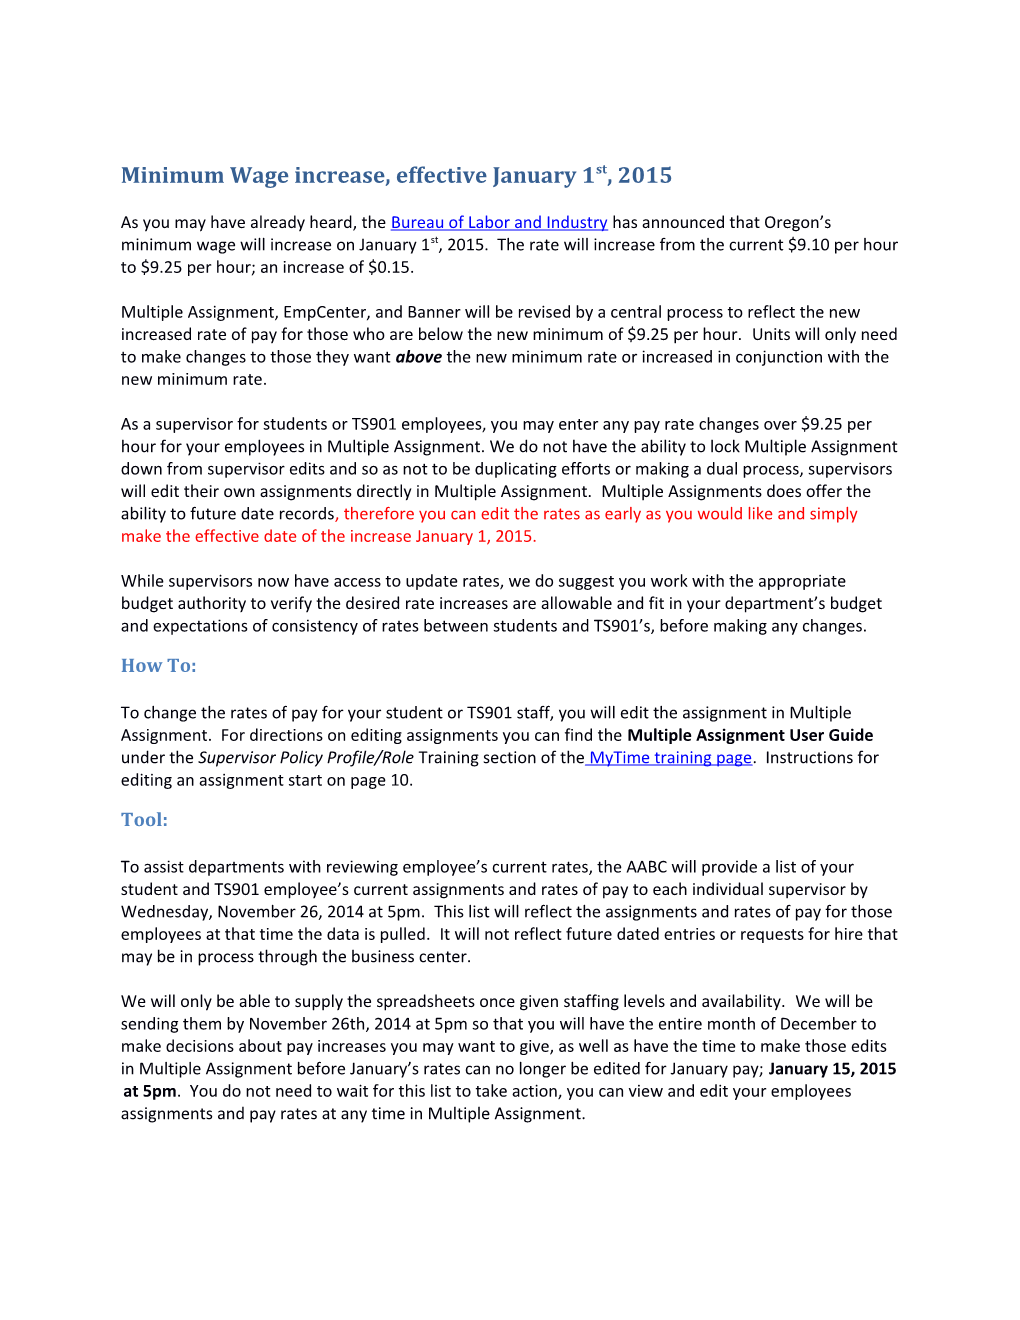 Minimum Wage Increase, Effective January 1St, 2015